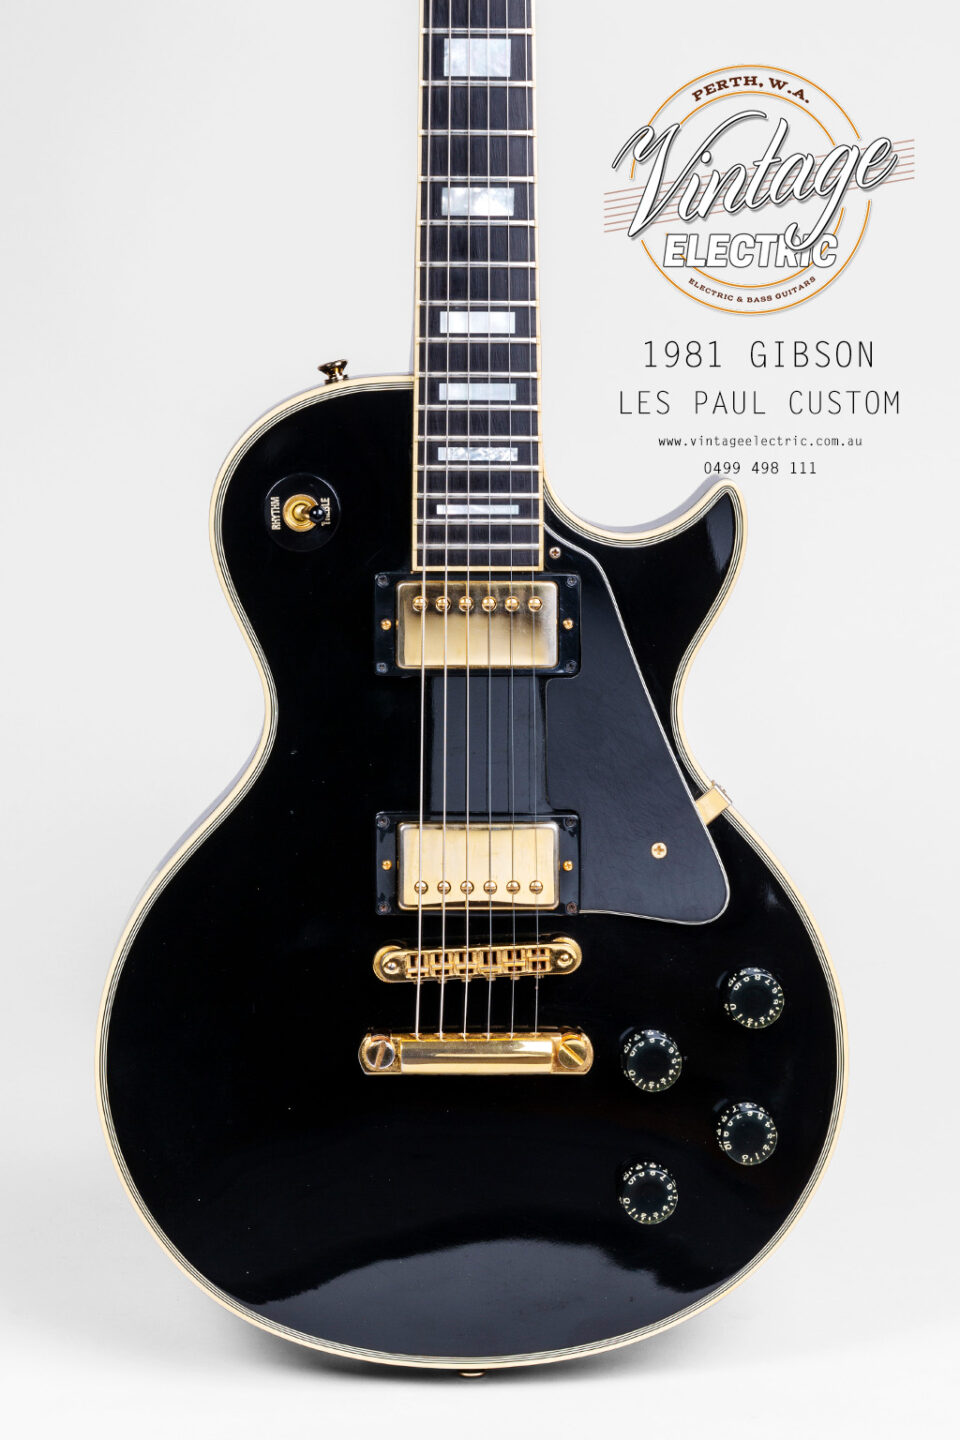 1981 Gibson Les Paul Custom Body